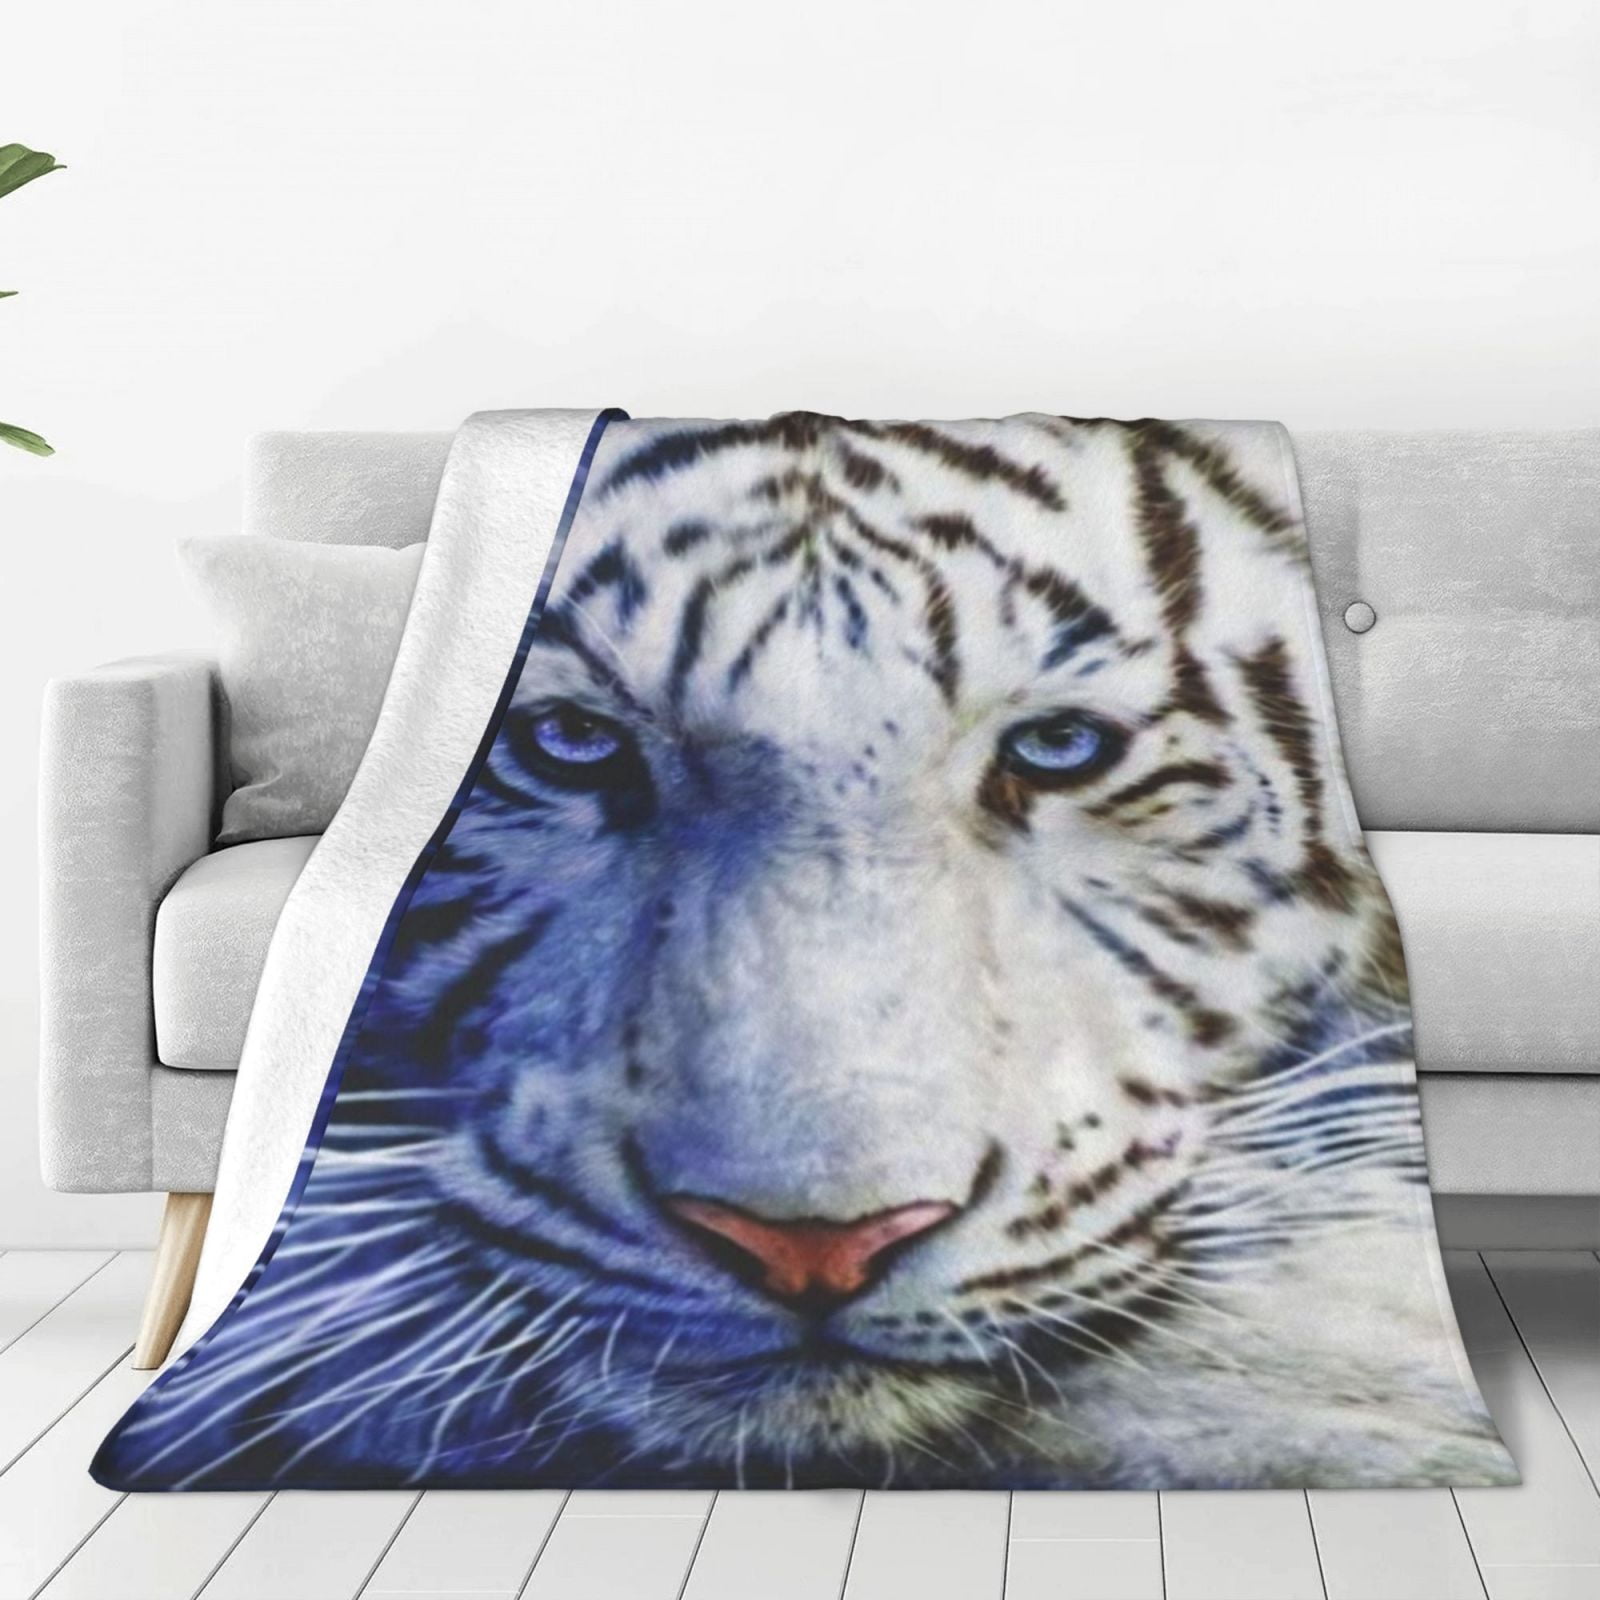 NEW Soft Warm Plush Sherpa Throw Blanket Sofa Bed Cozy Gift Tiger Dog Deer 50x60 